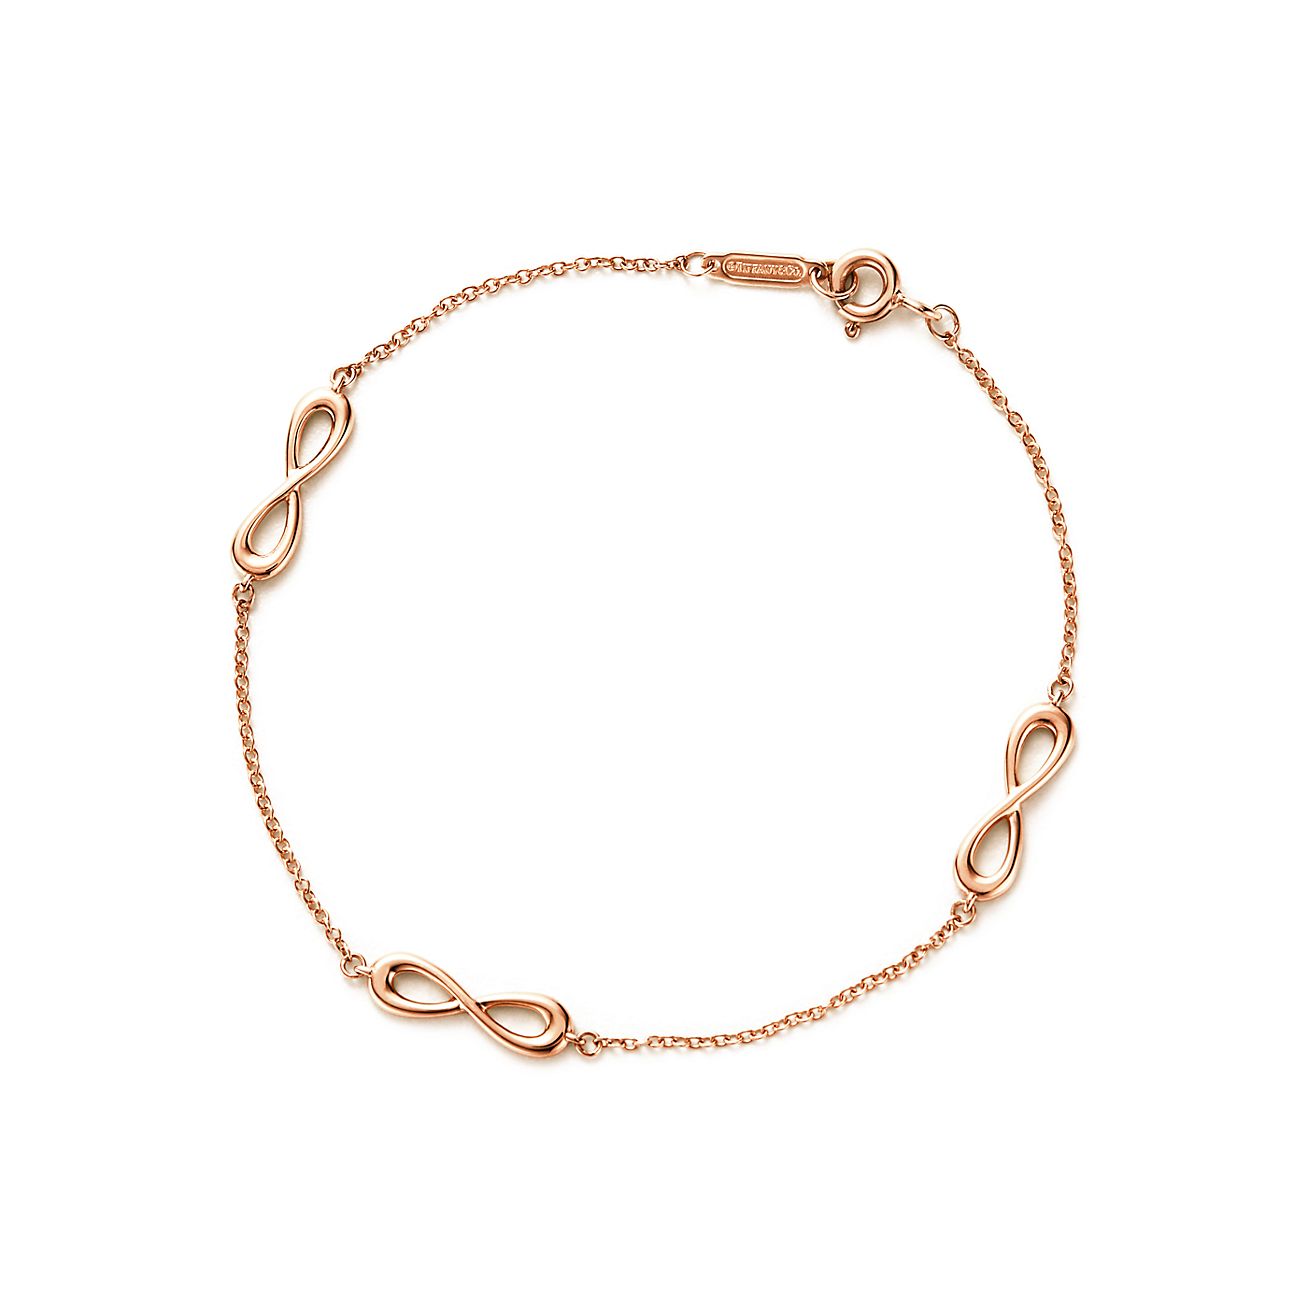 Tiffany Infinity endless bracelet in 